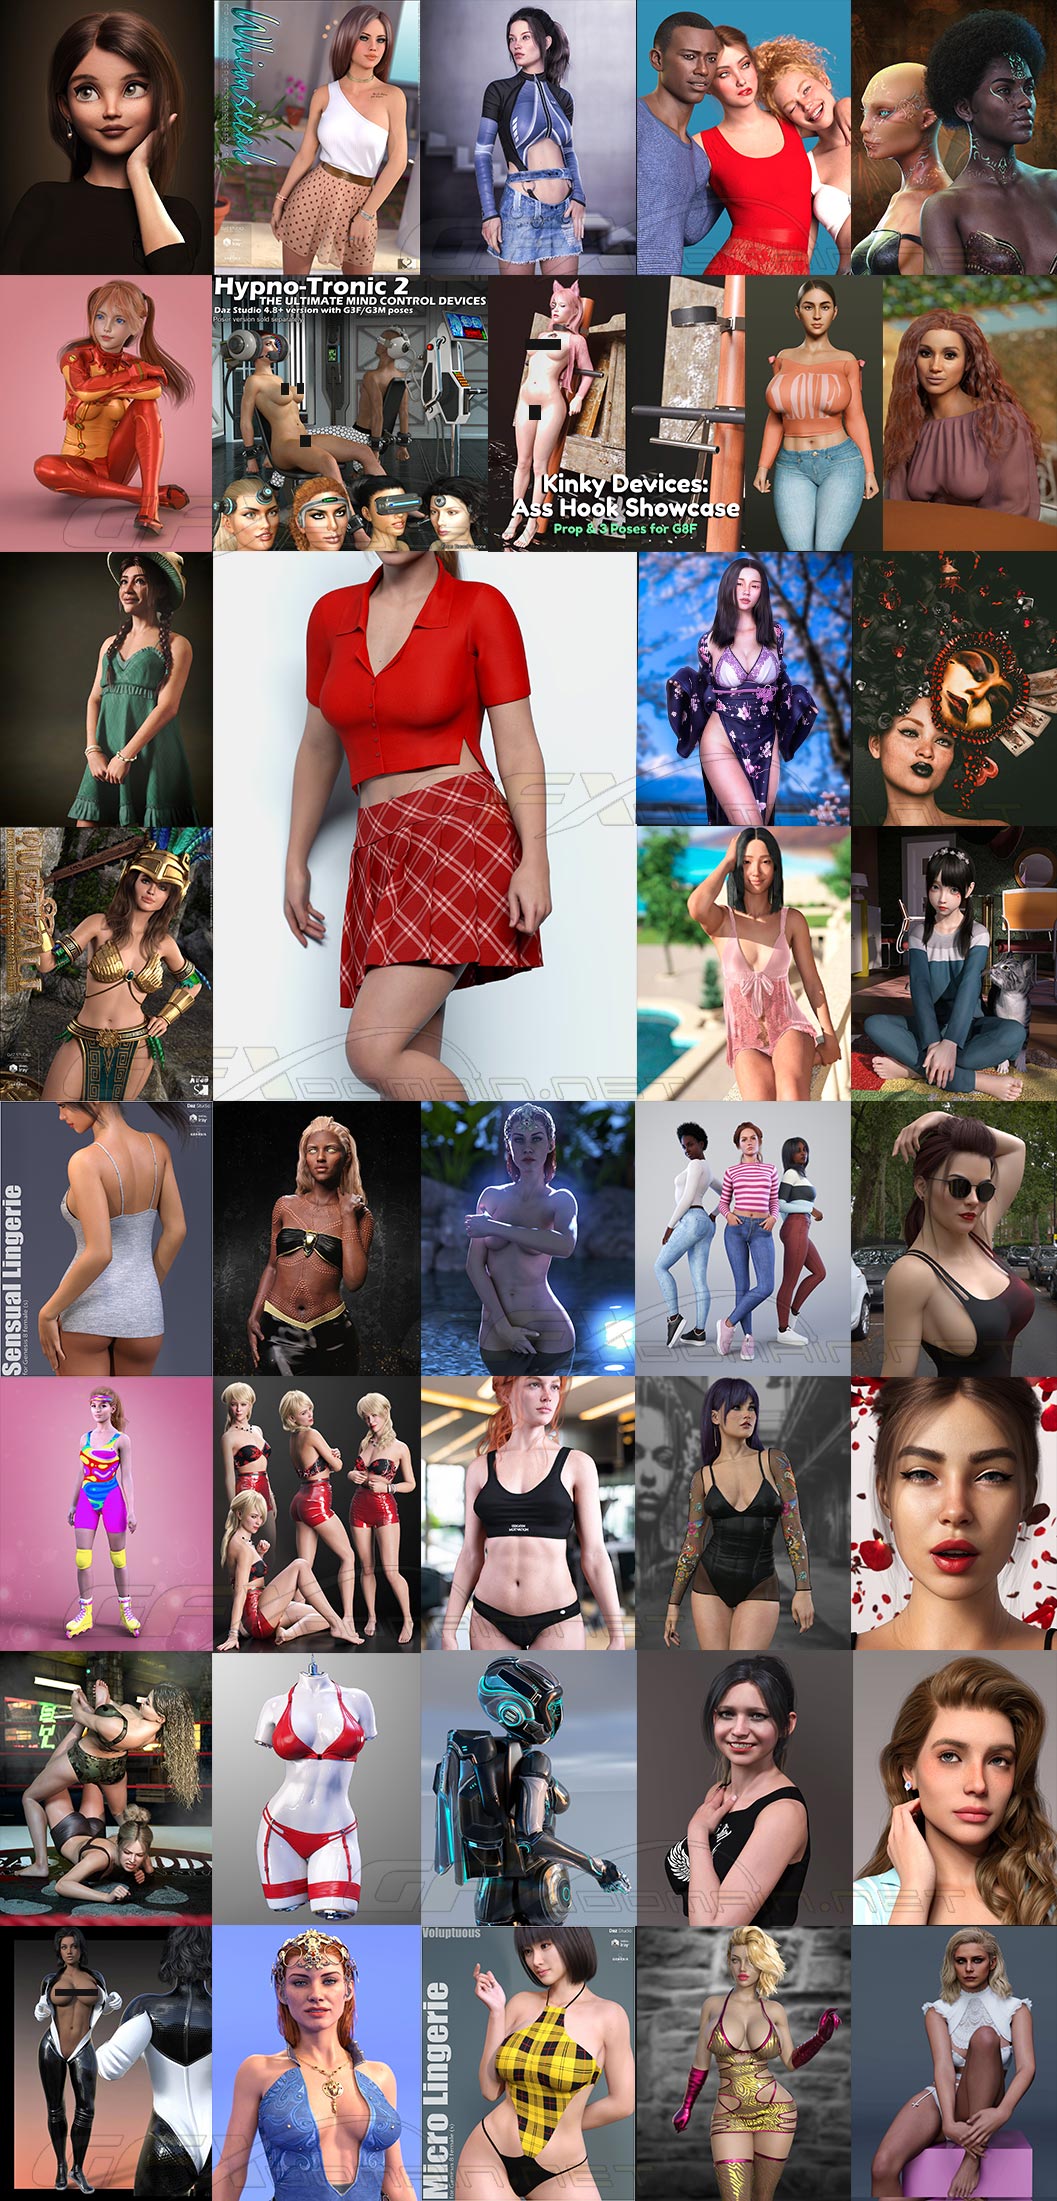 ArtStation - X-Sexy Fashion Lingerie for Genesis 3 Female(s)